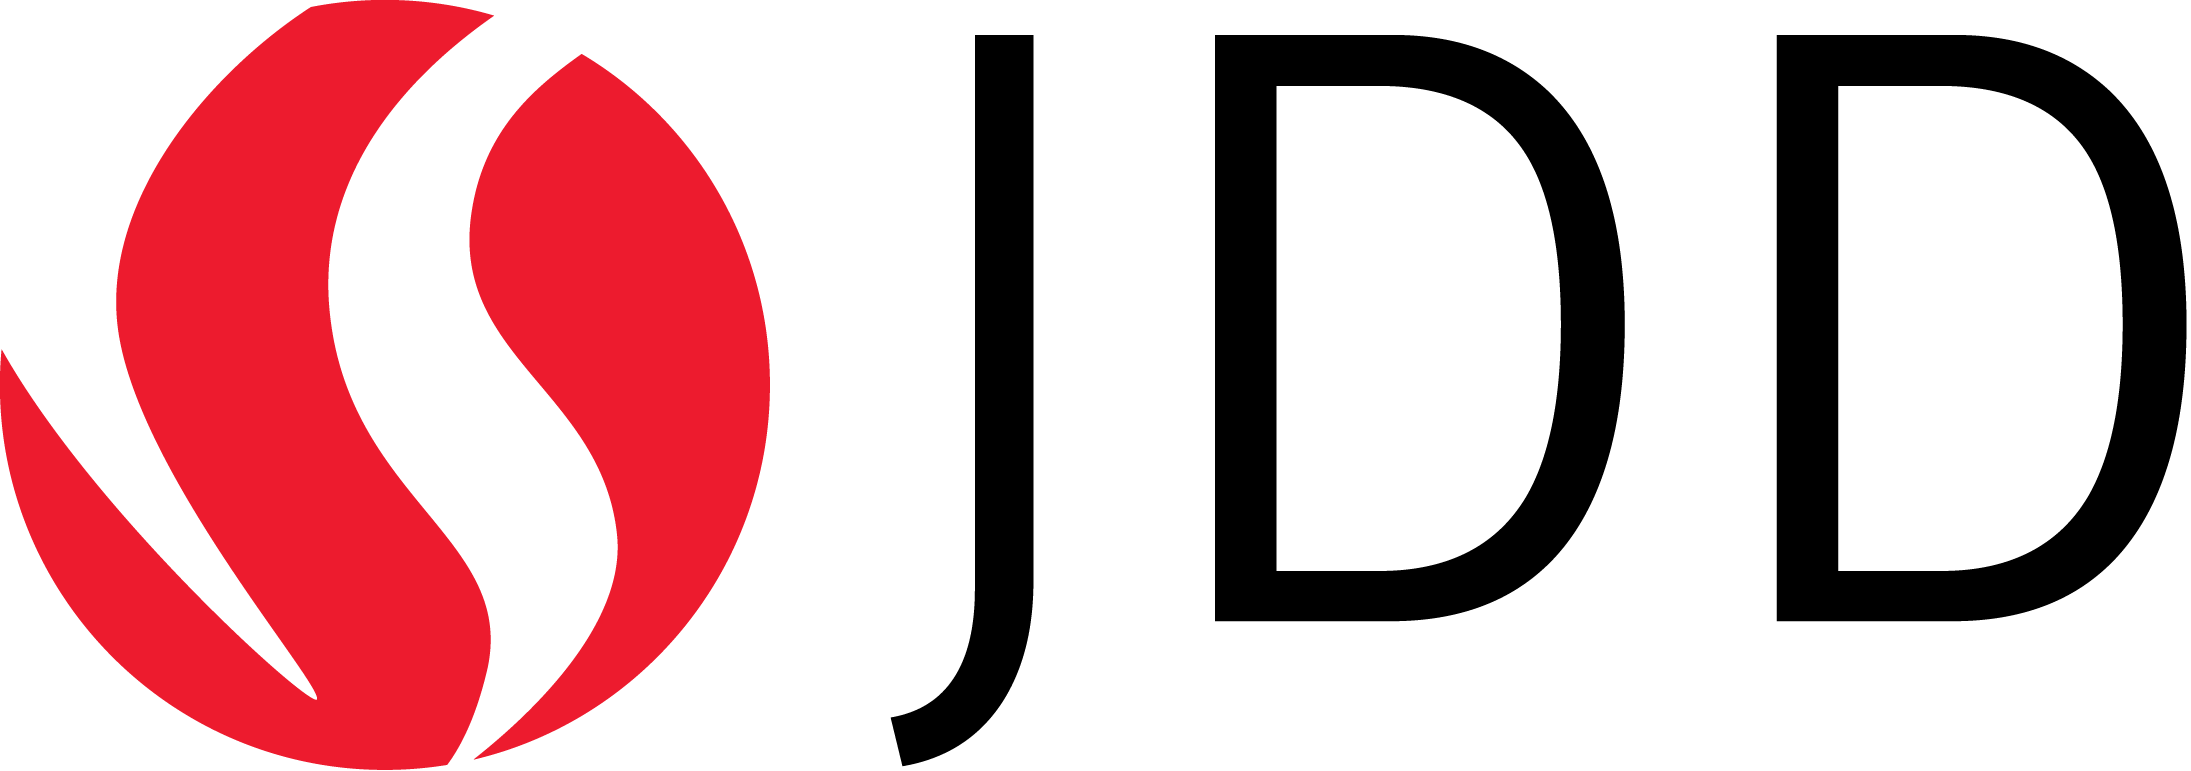 jdd_logo.png